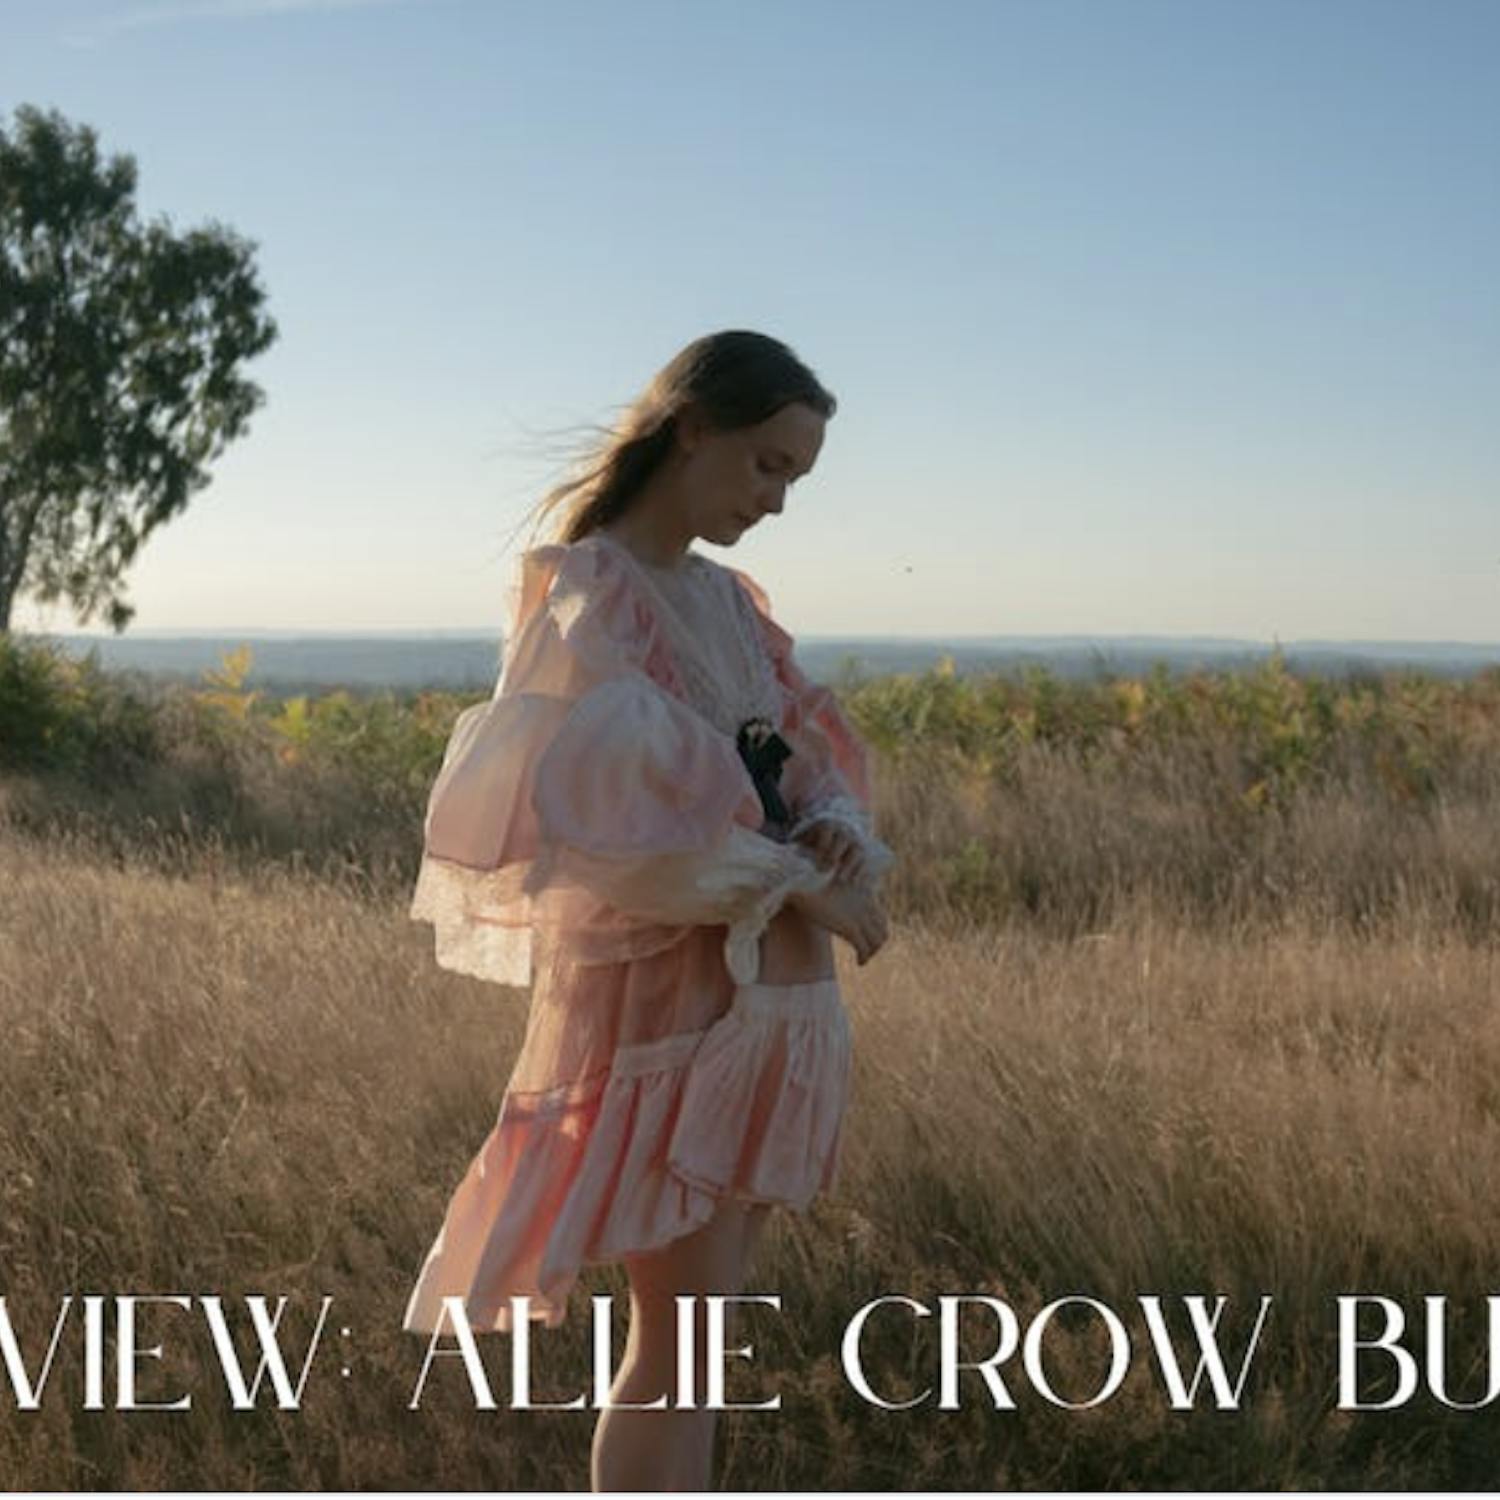 Allie Crow Buckley